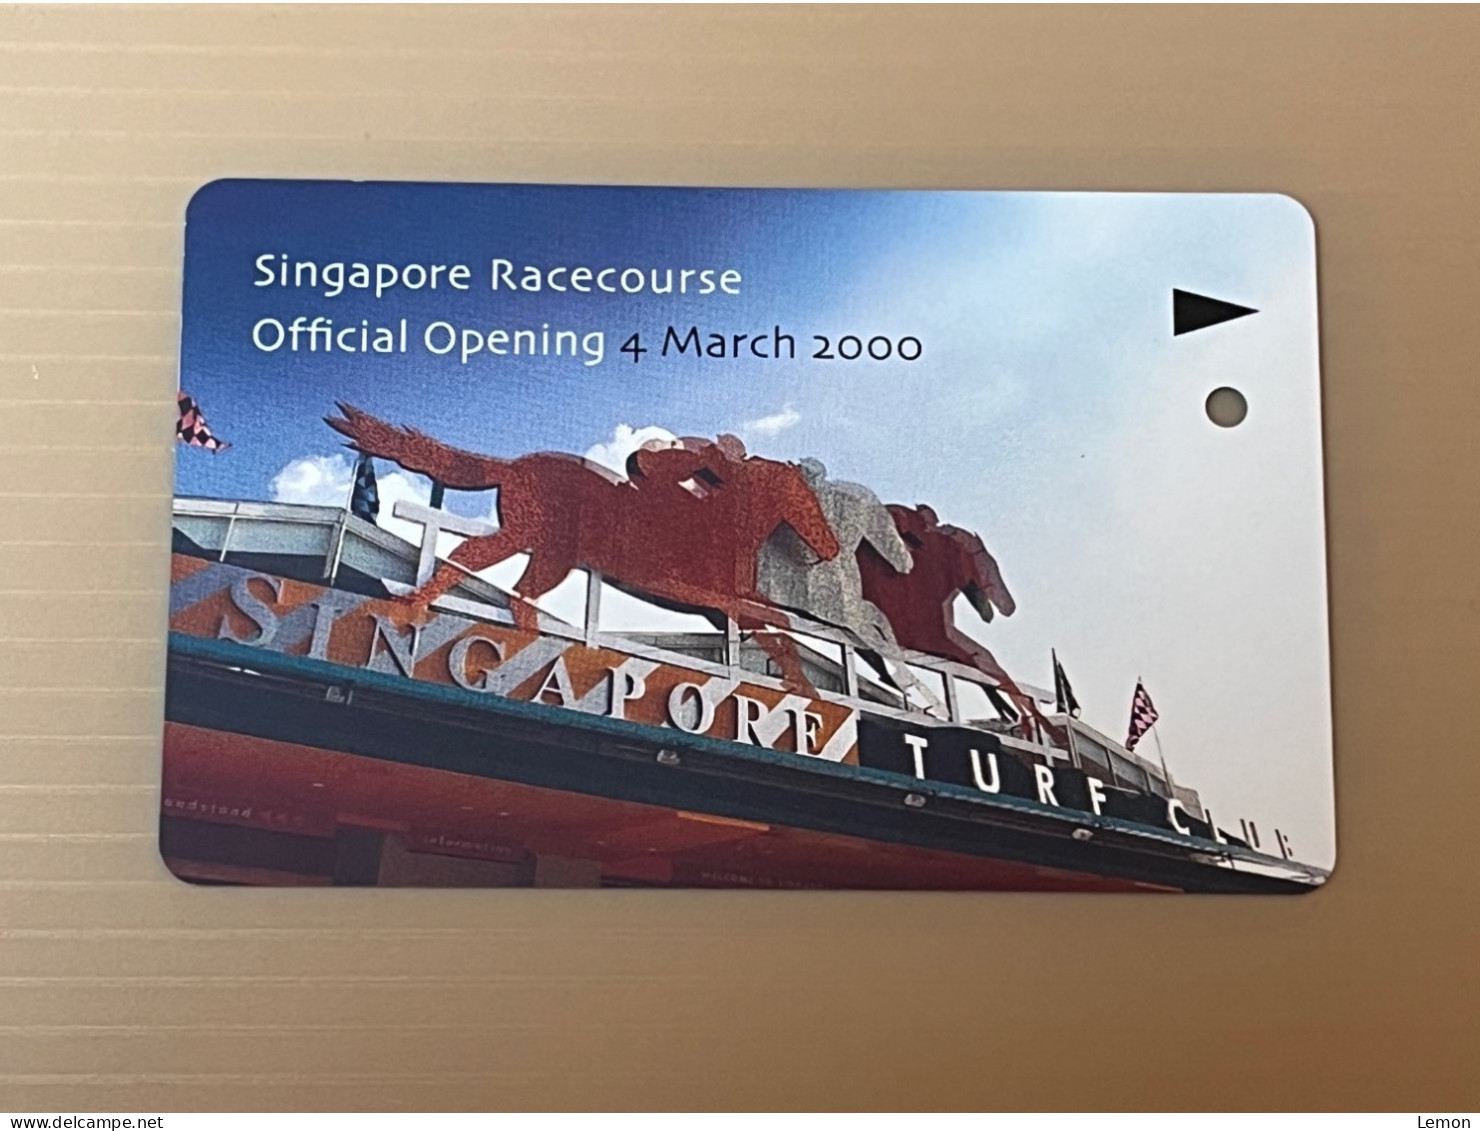 Mint Singapore TransitLink Metro Train Subway Ticket Card, Singapore Racecourse Opening, Set Of 1 Mint Card In Folder - Singapore